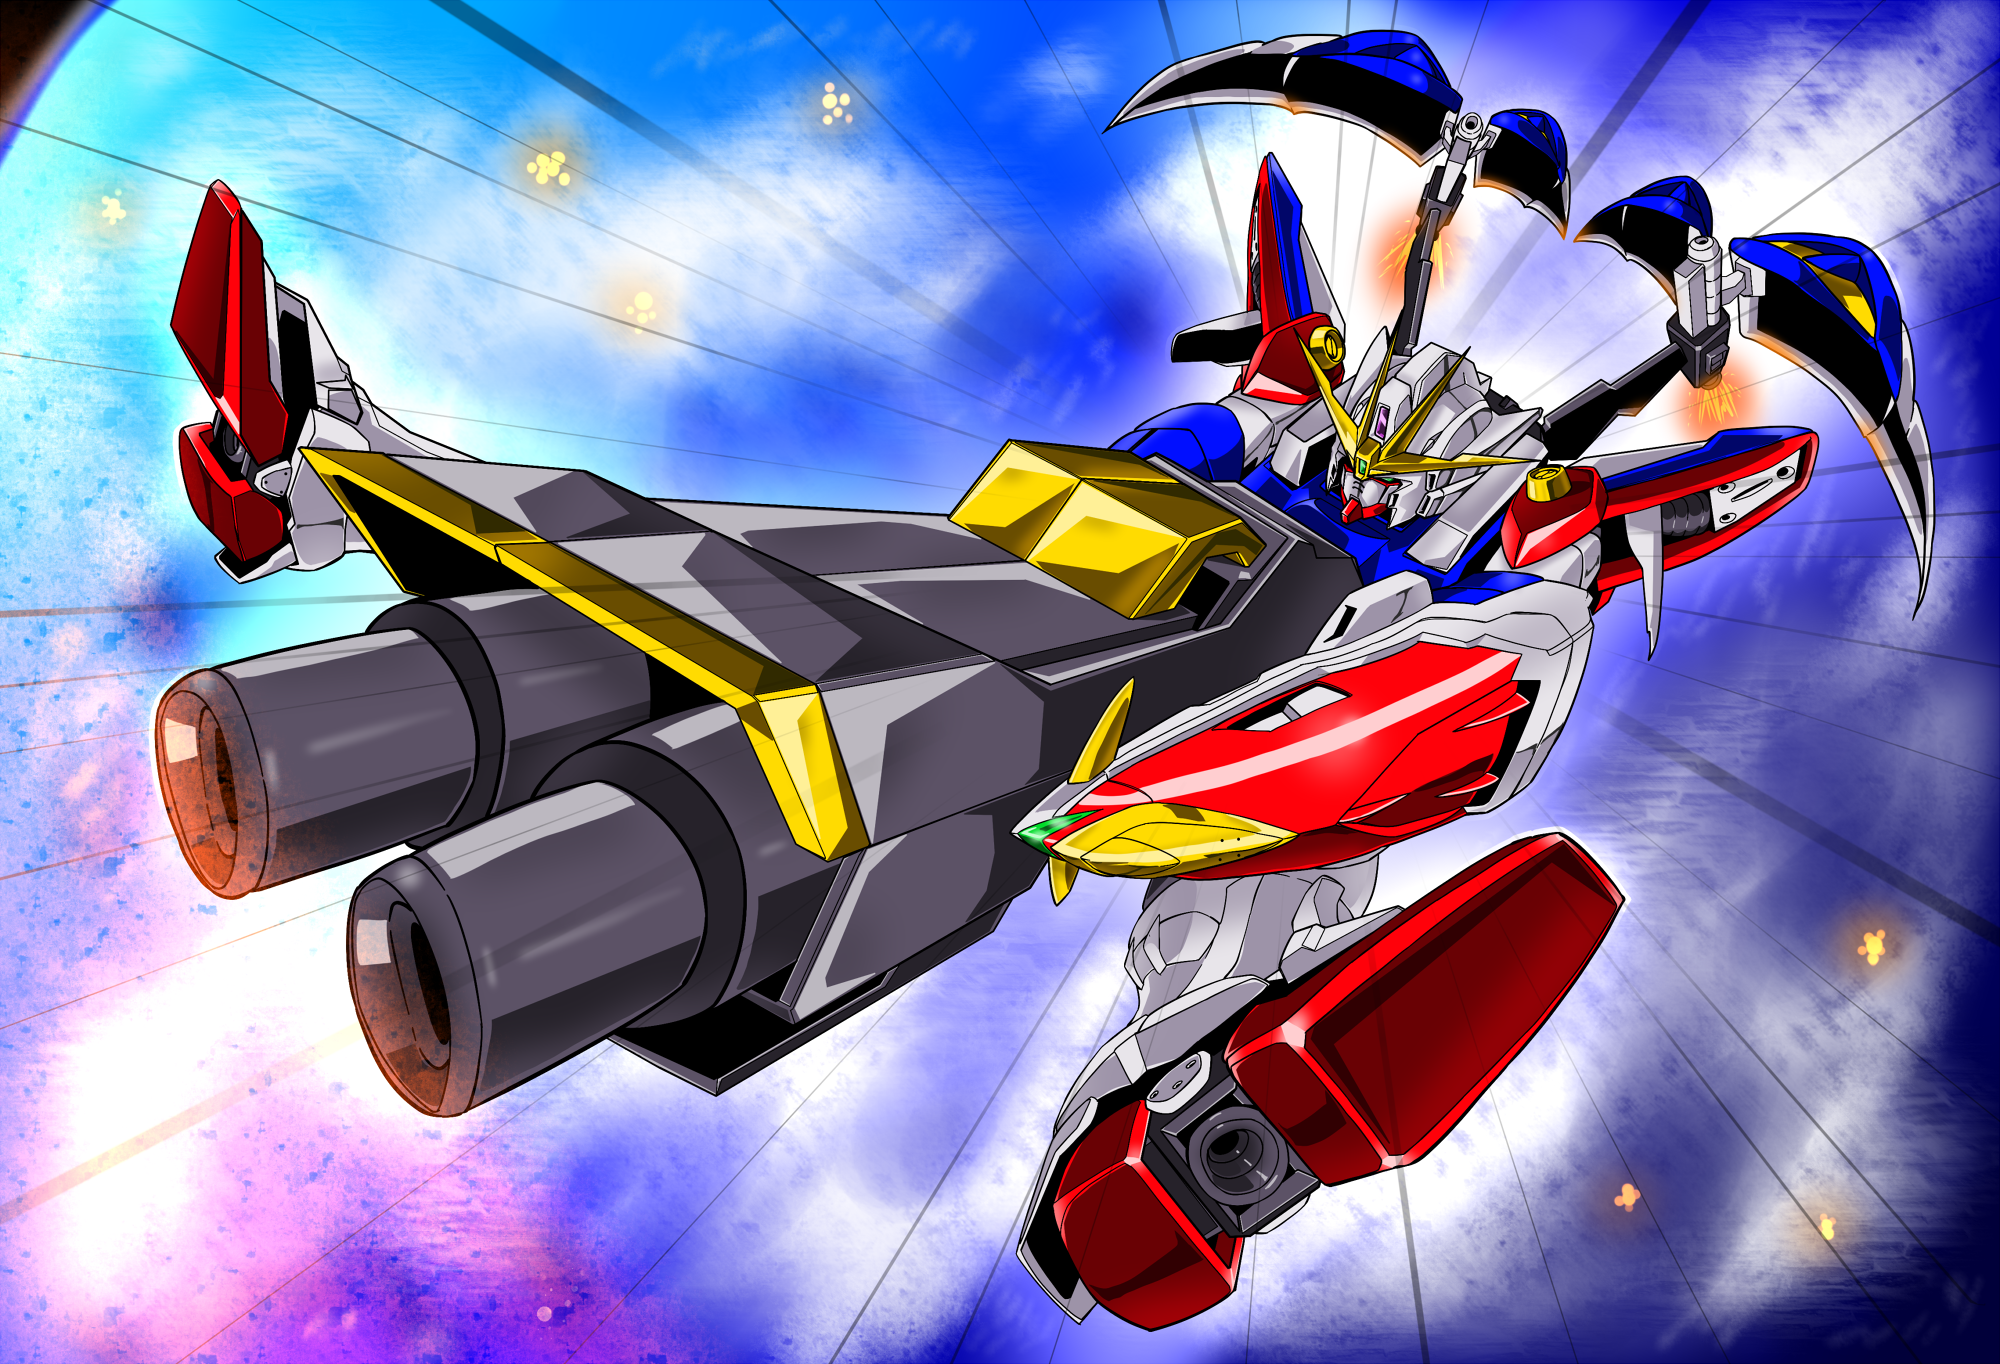 Anime 2000x1364 anime mechs Super Robot Taisen Gundam Mobile Suit Gundam Wing Wing Gundam Zero artwork digital art fan art